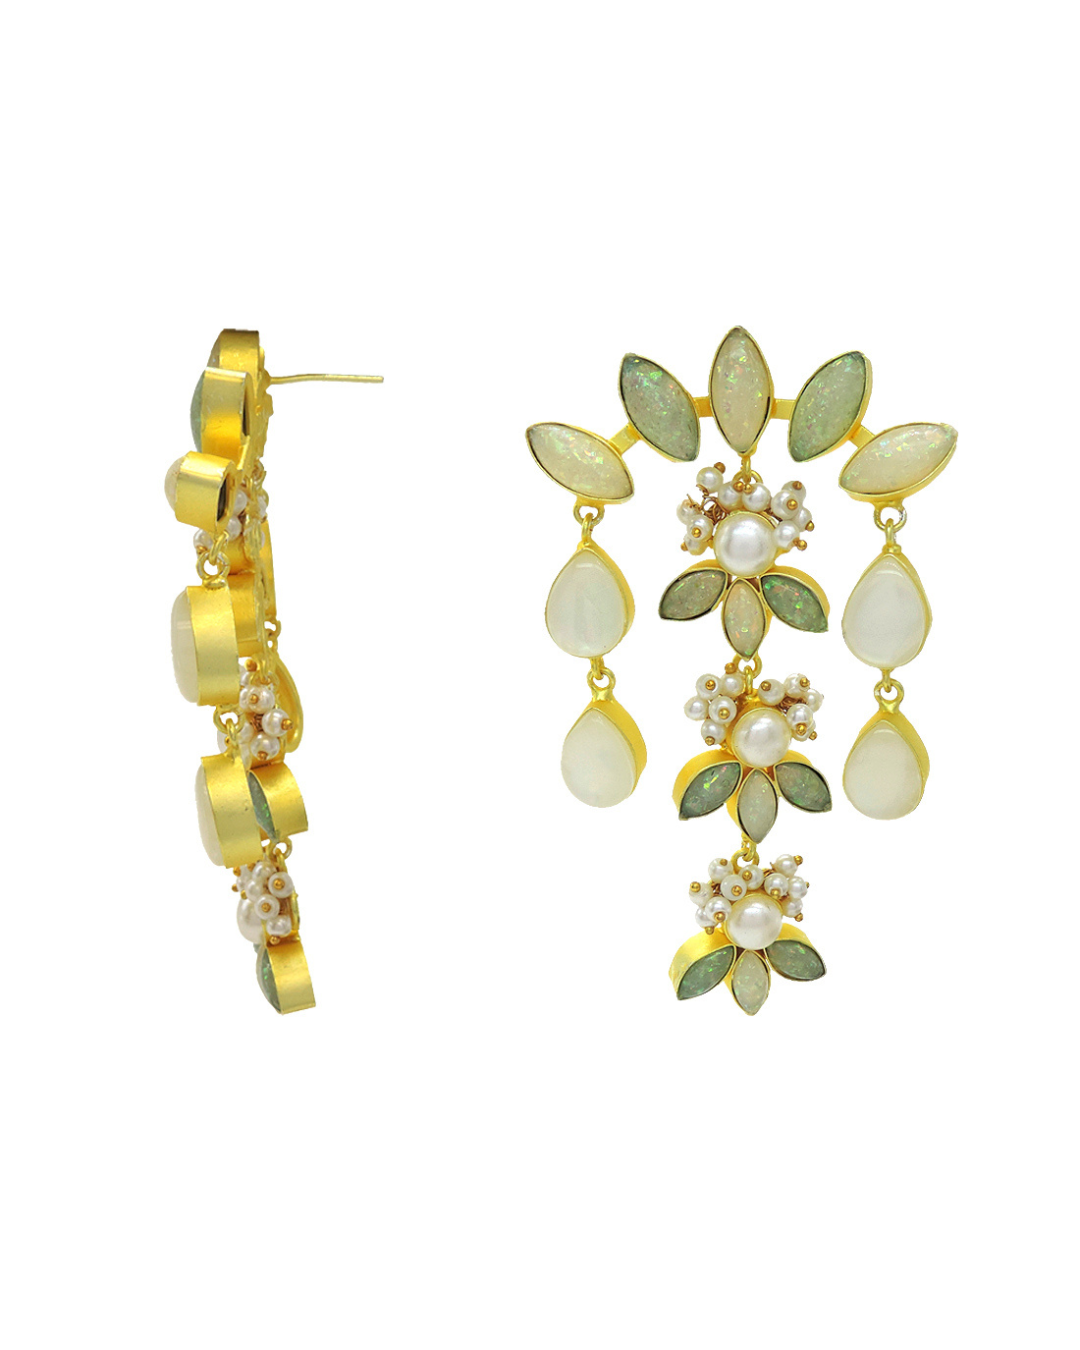 Demi Earrings - Earrings - Handcrafted Jewellery - Made in India - Dubai Jewellery, Fashion & Lifestyle - Dori